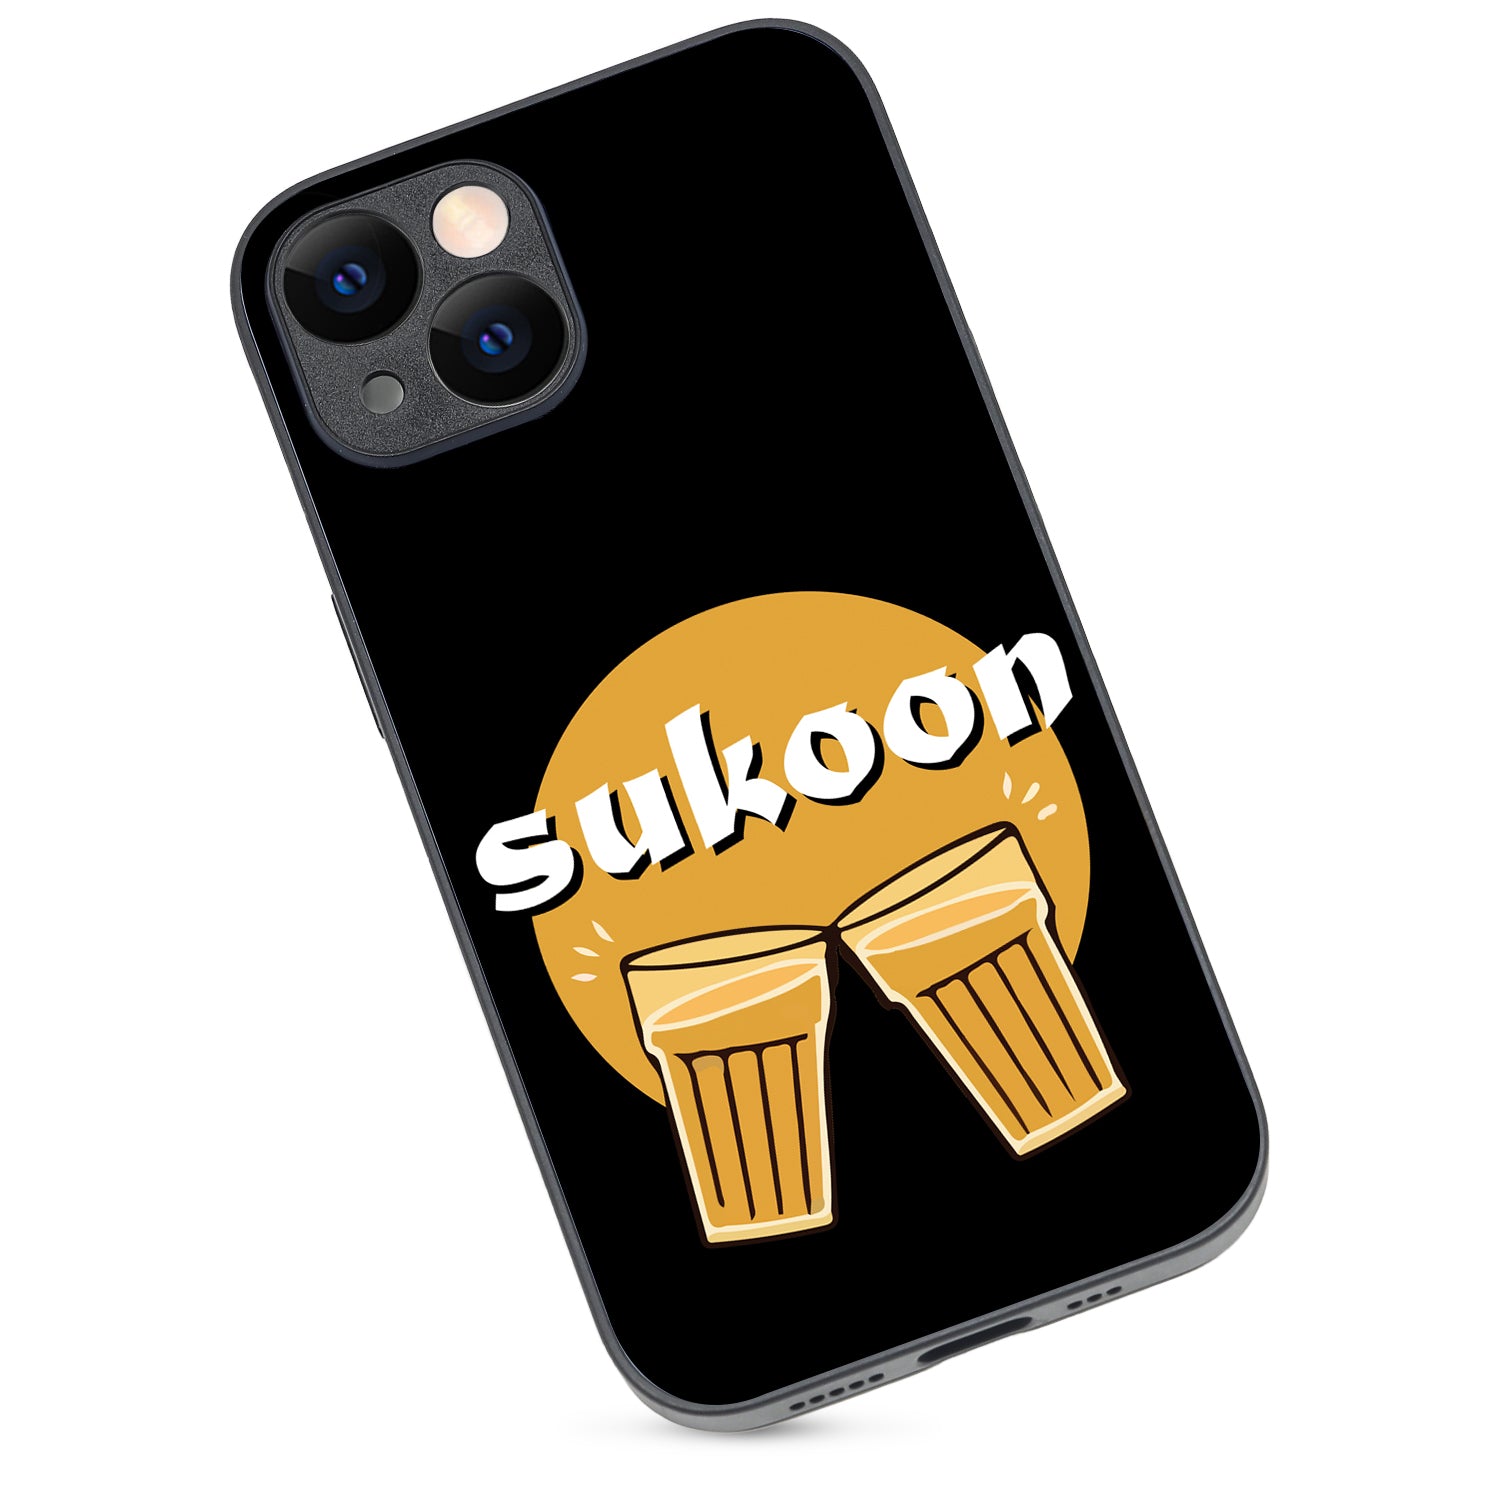 Sukoon Uniword iPhone 14 Case